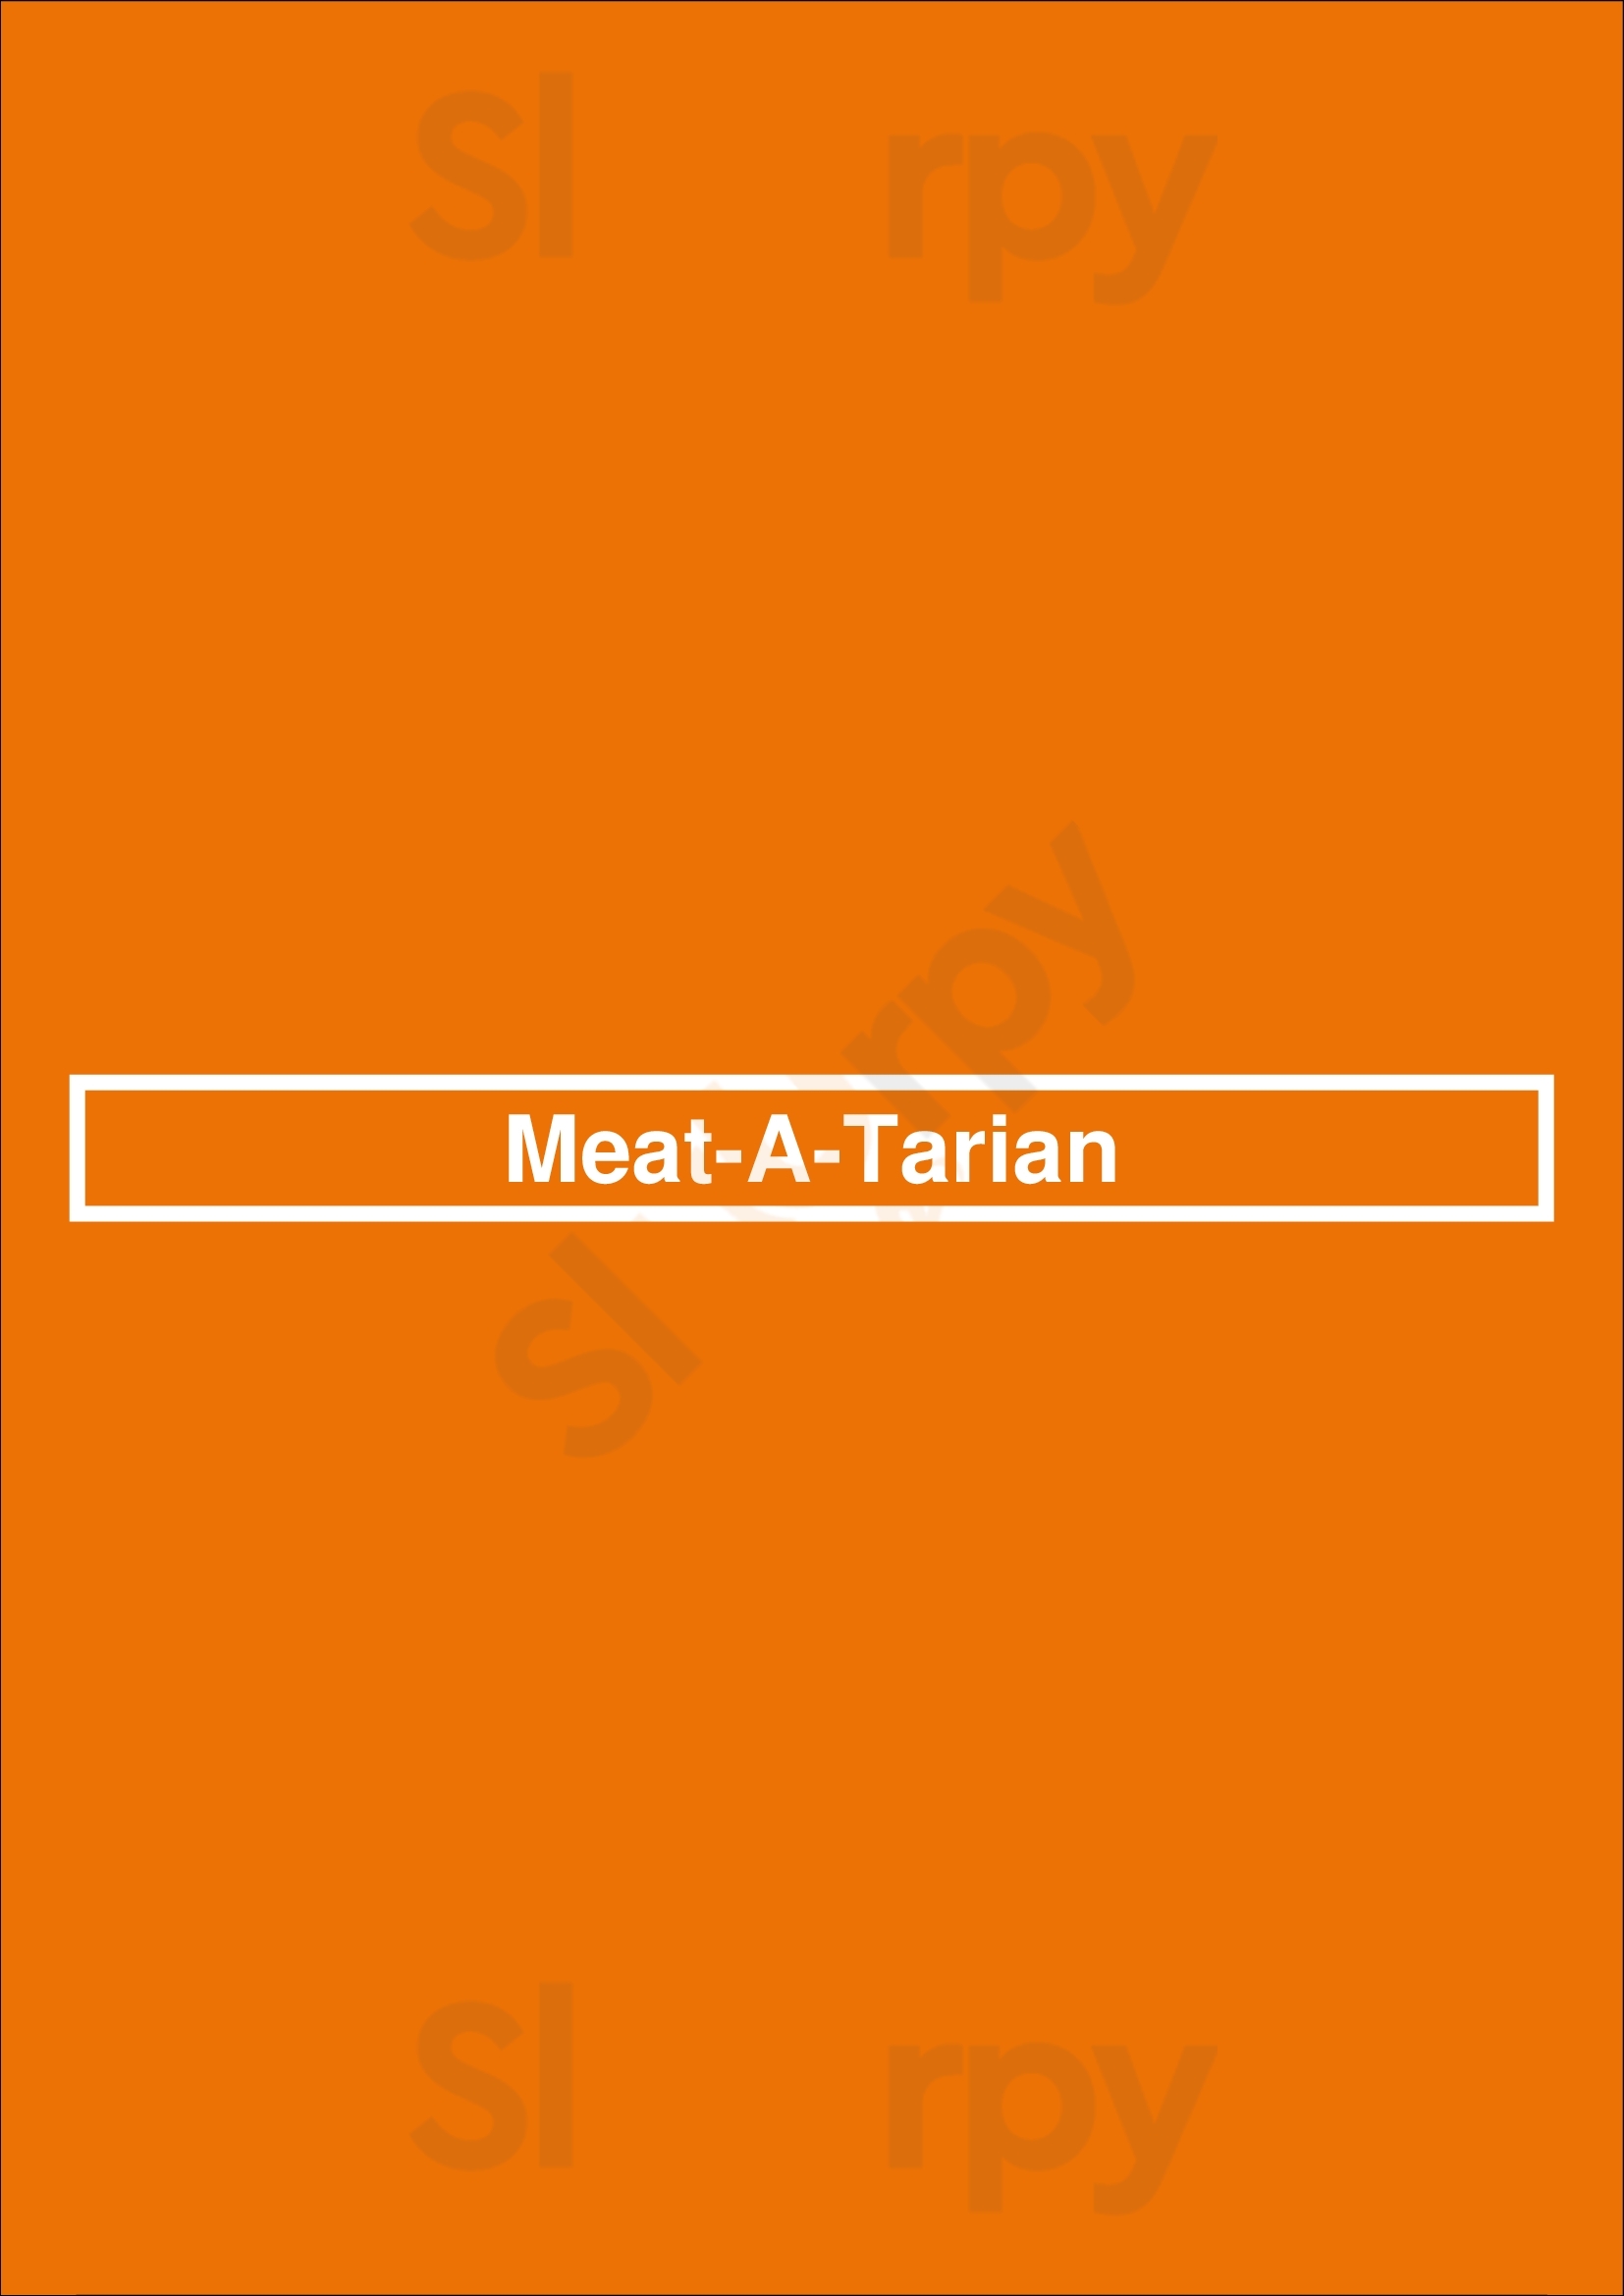 Meat-a-tarian Montclair Menu - 1